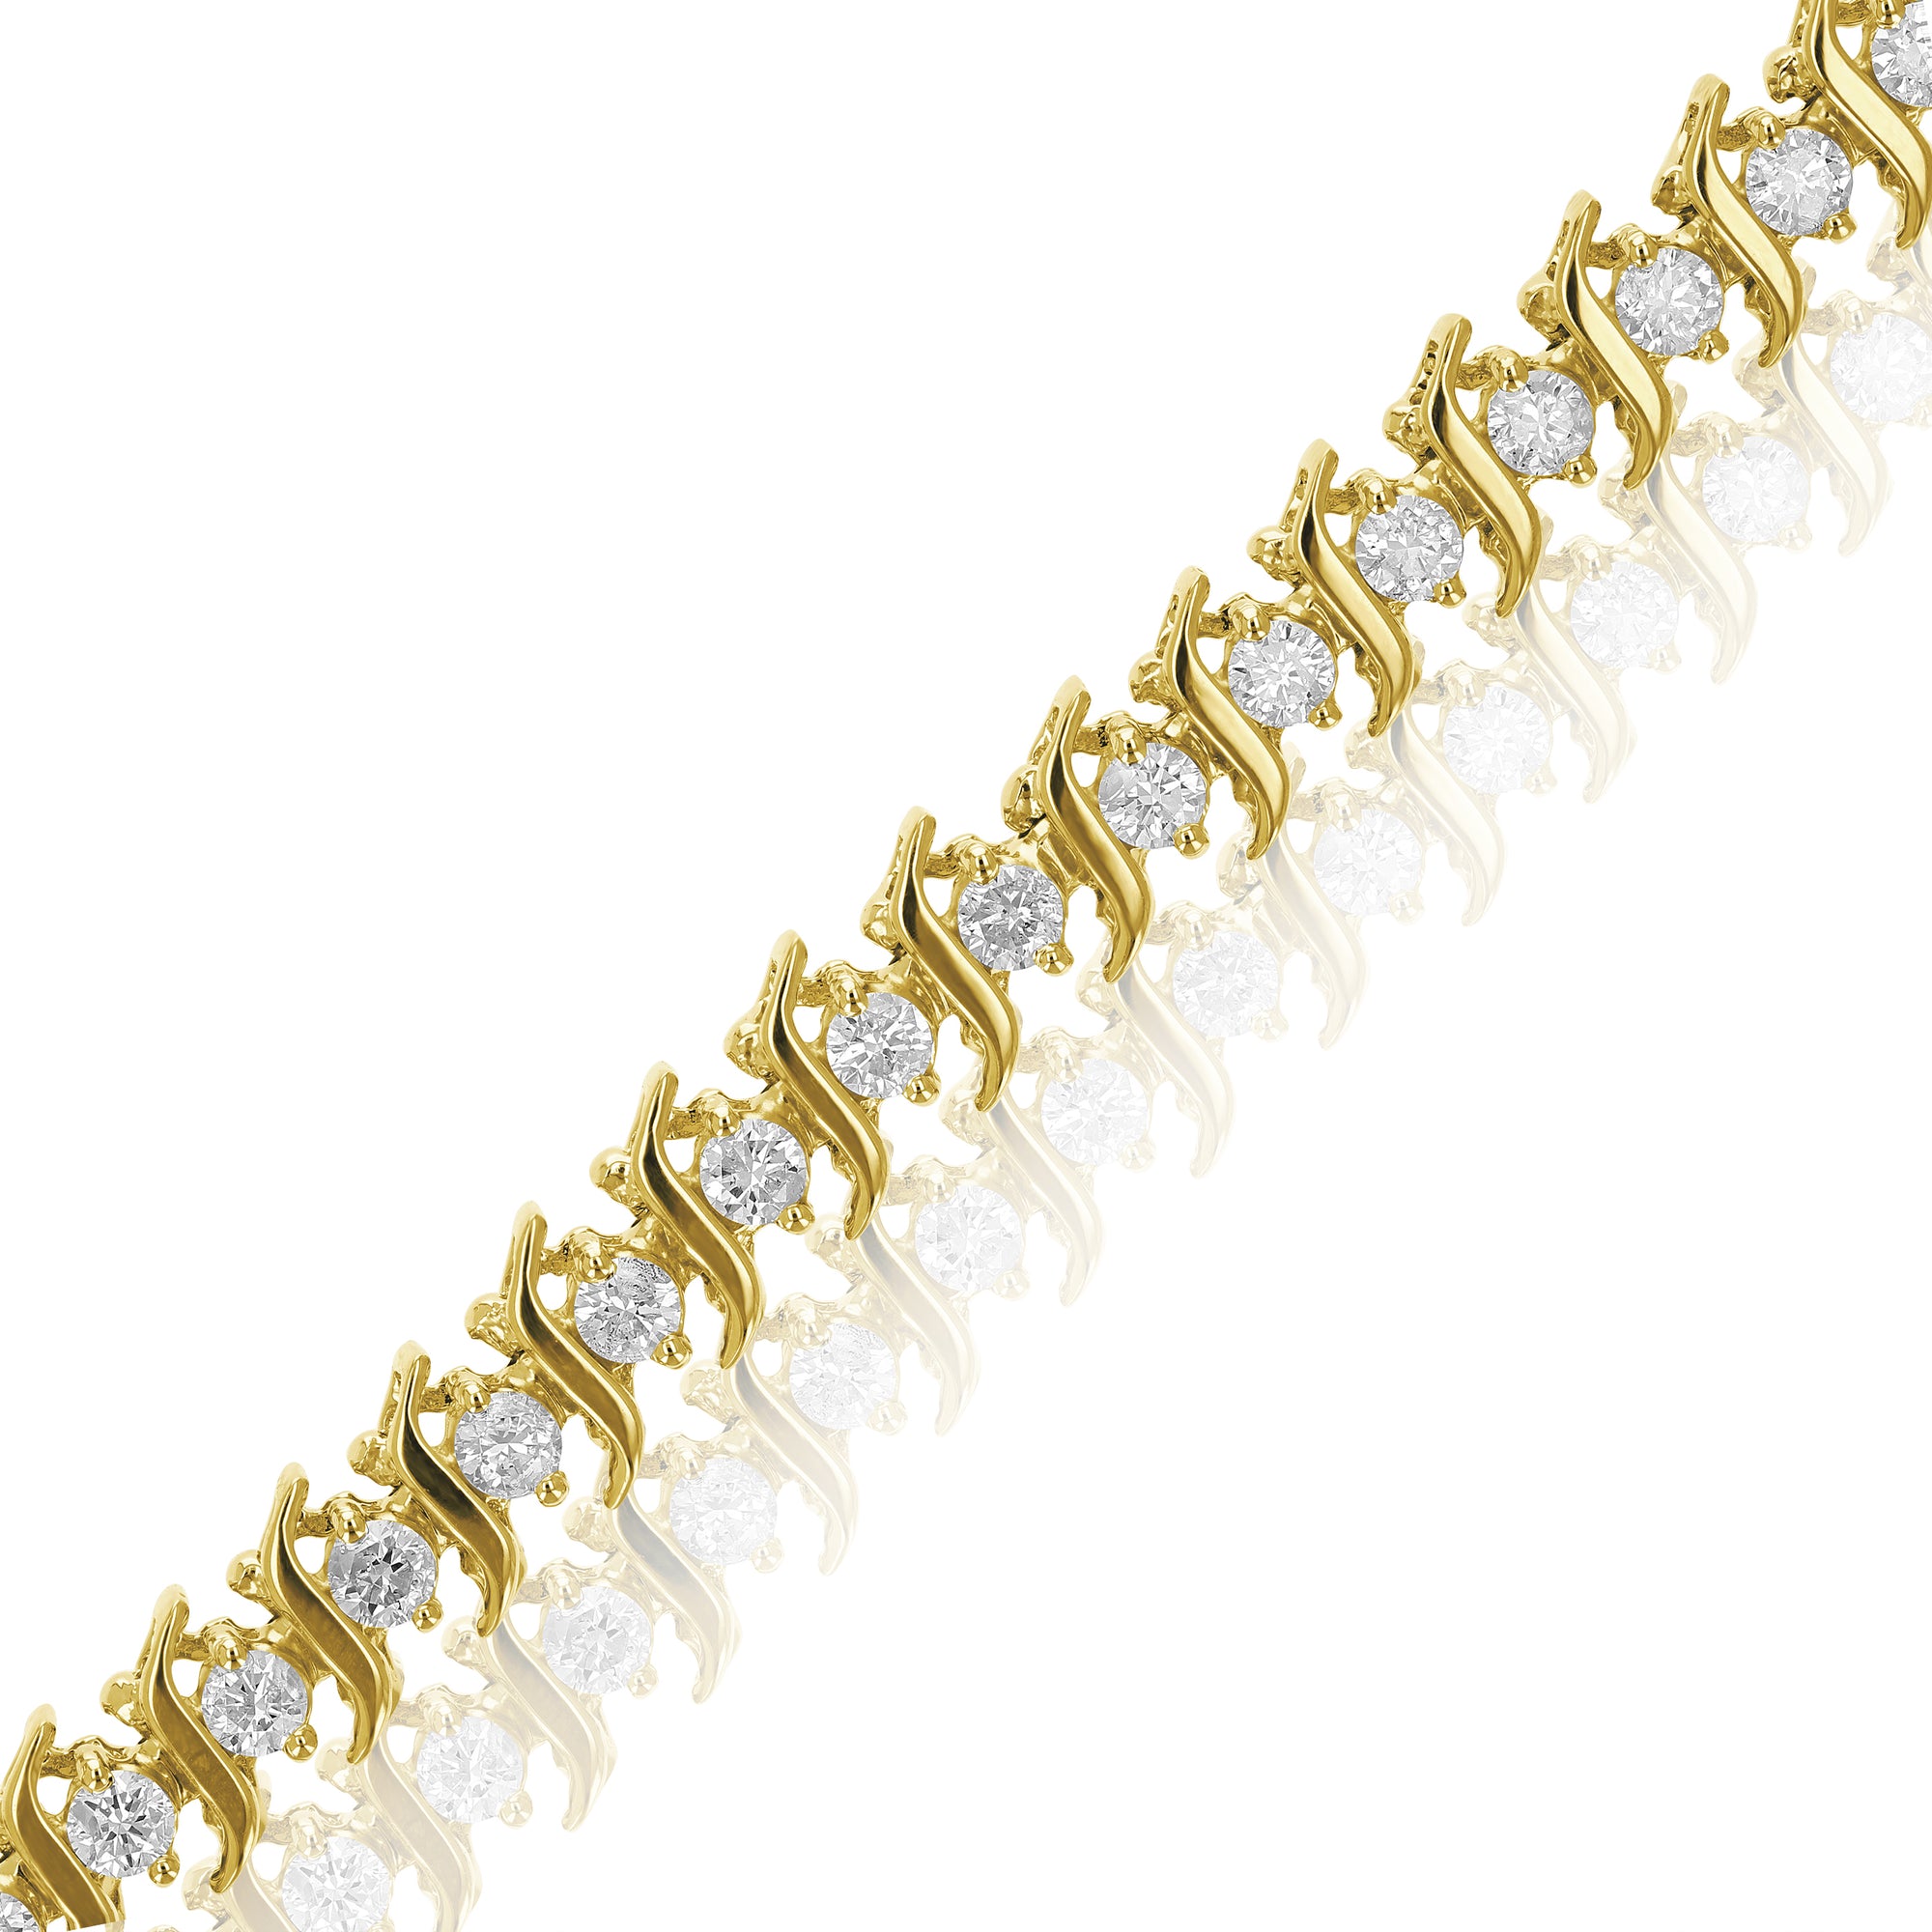 2.25 cttw Diamond Bracelet 10K Yellow Gold Classic S-Link Round 7 Inch